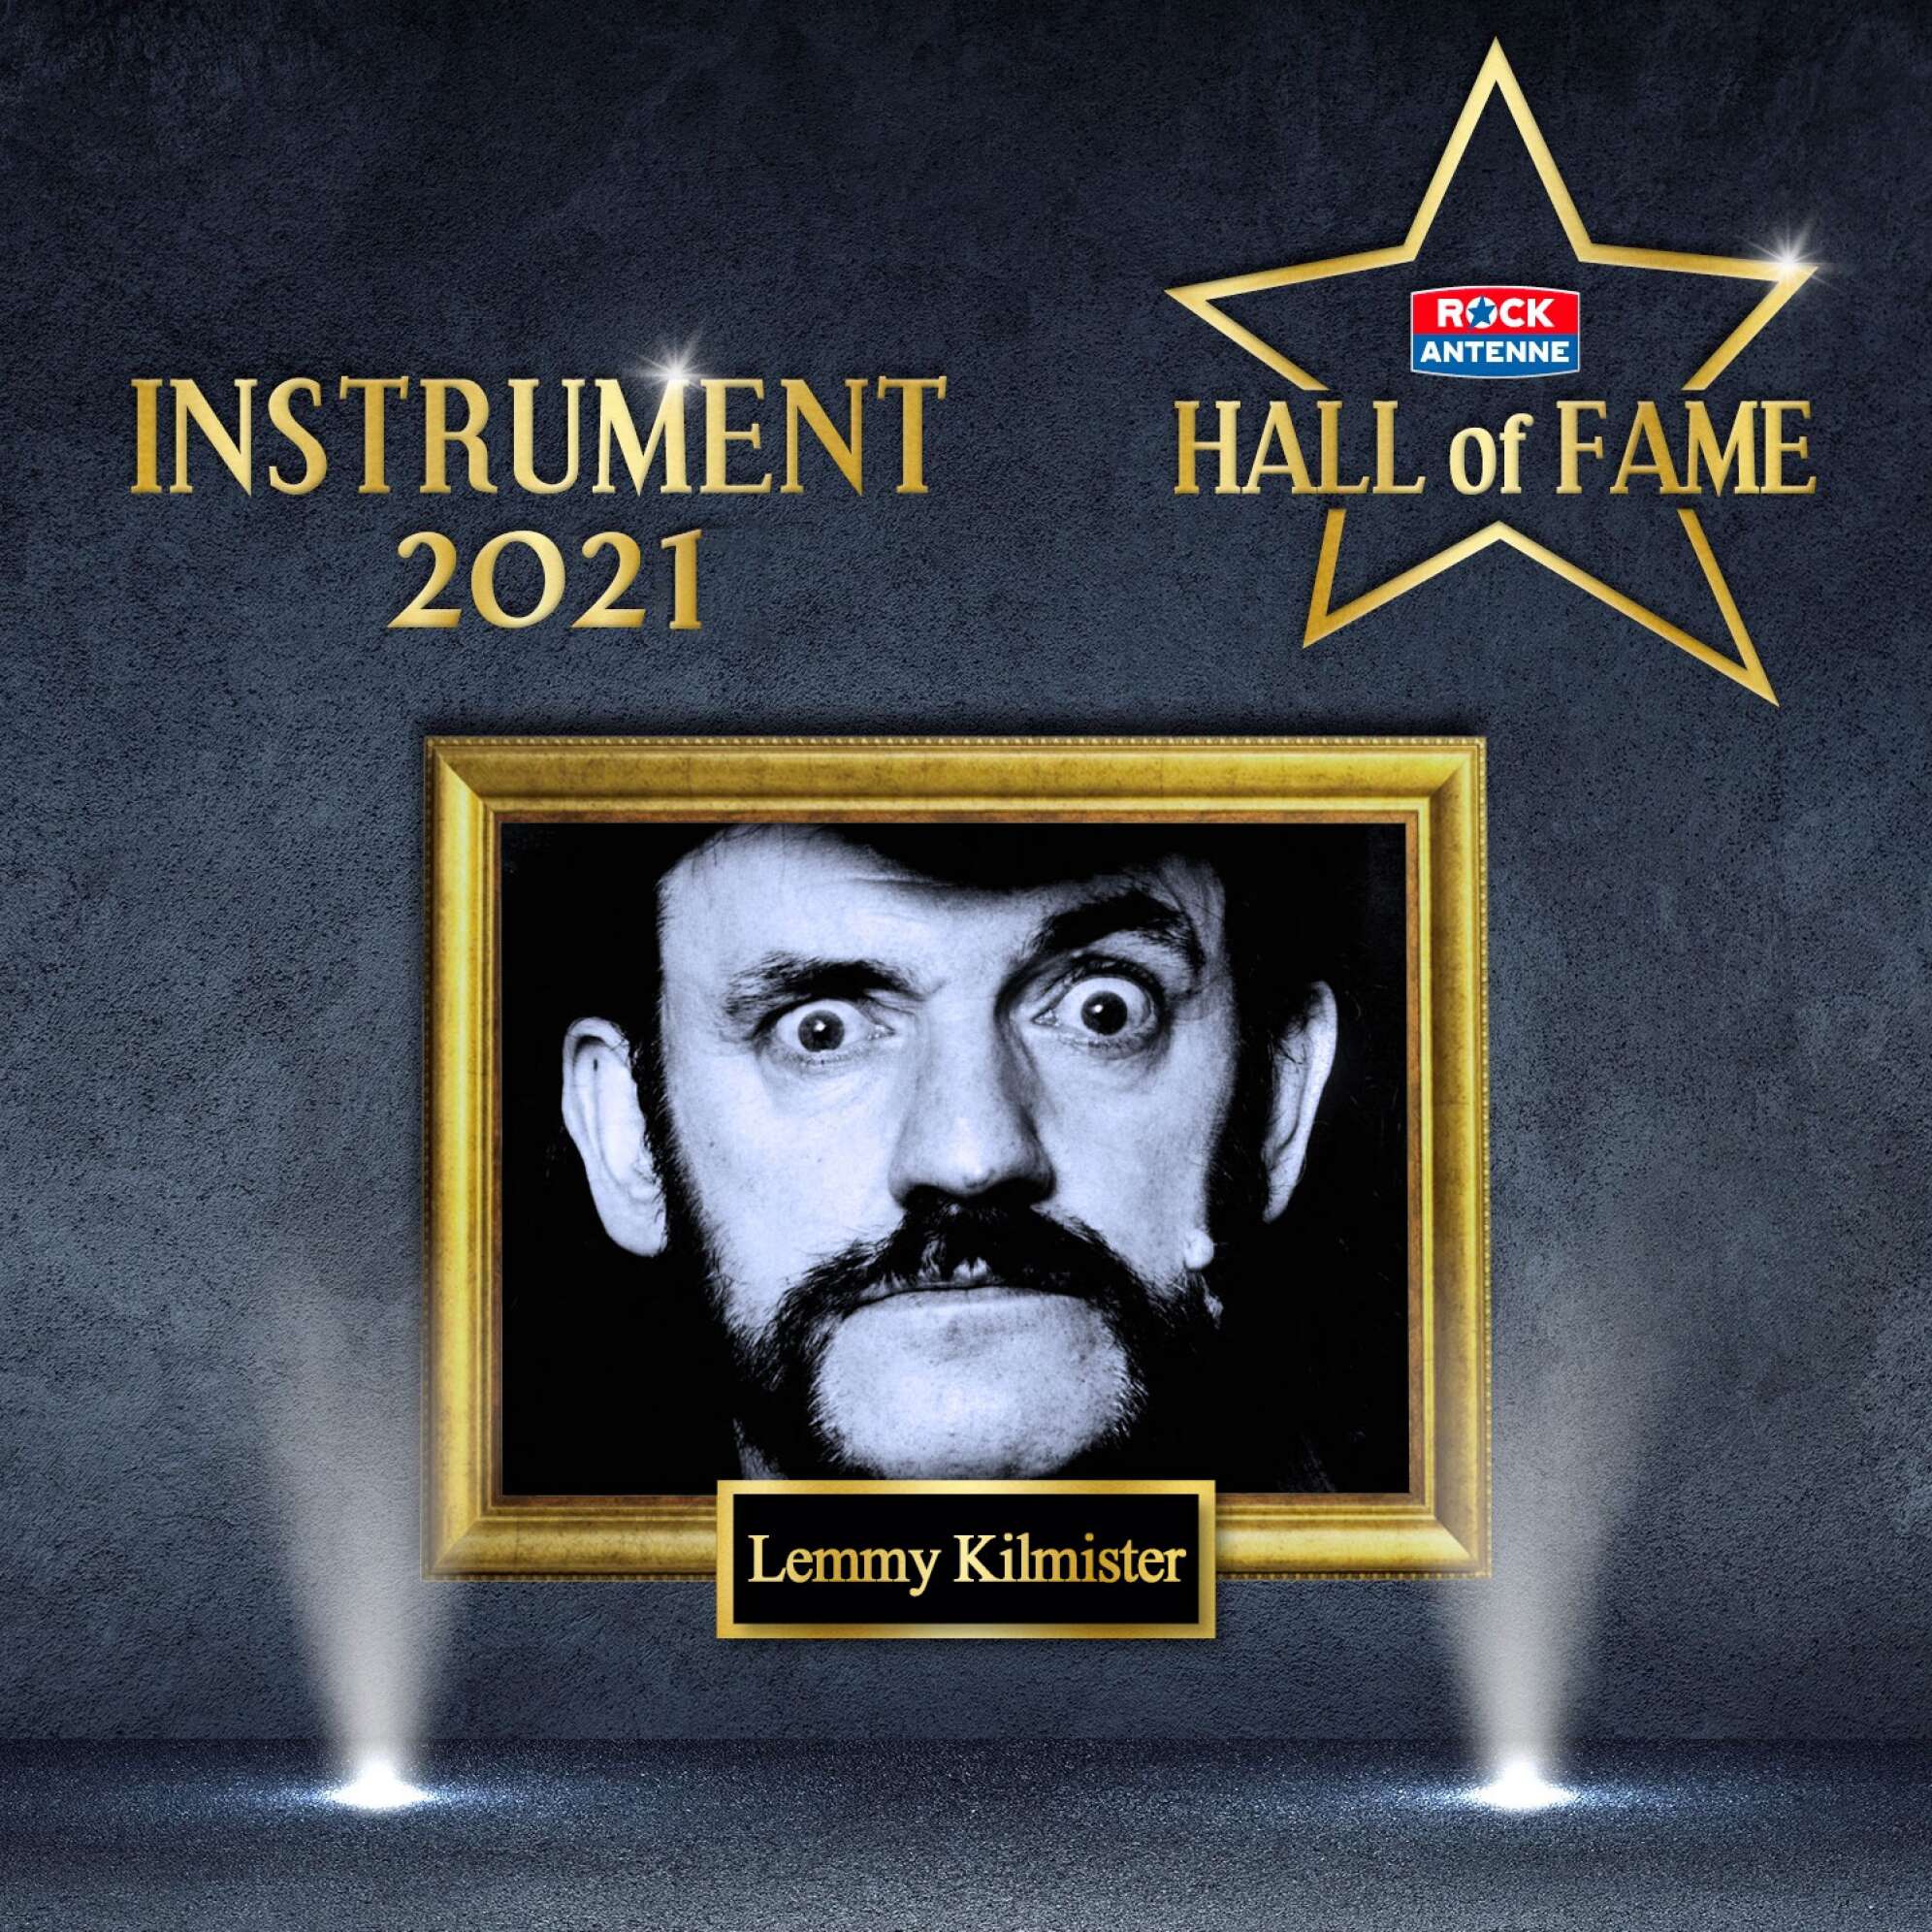 Bild der ROCK ANTENNE Hall of Fame - Gewinner Kategorie Instrument 2021: Lemmy Kilmister